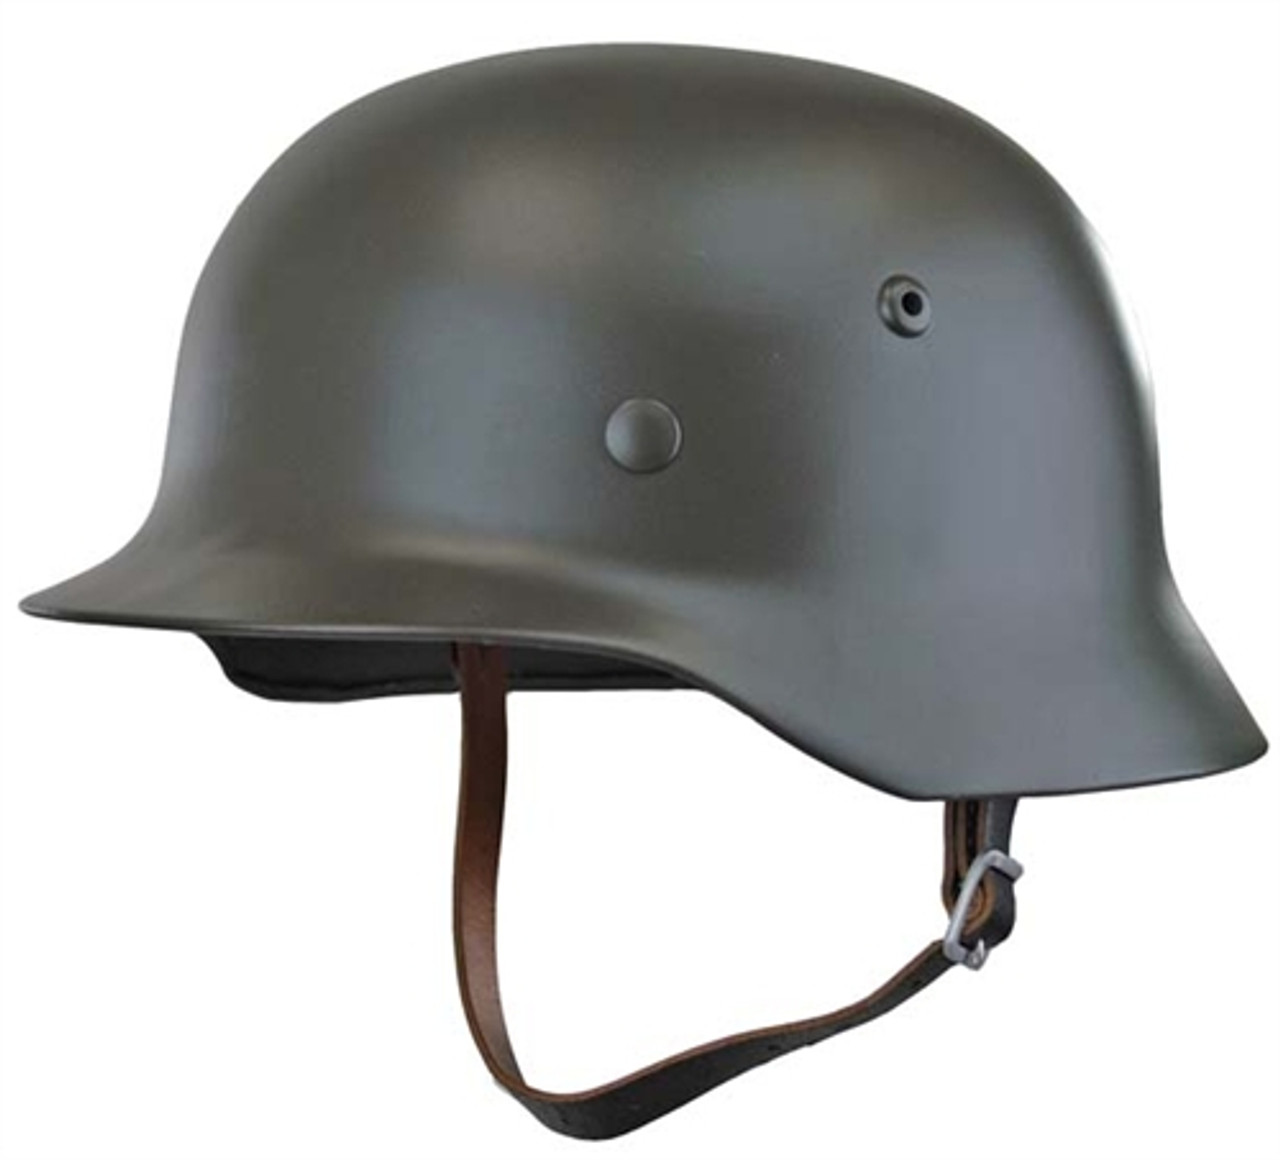 Reproduction M35 German Helmet Hessen Antique